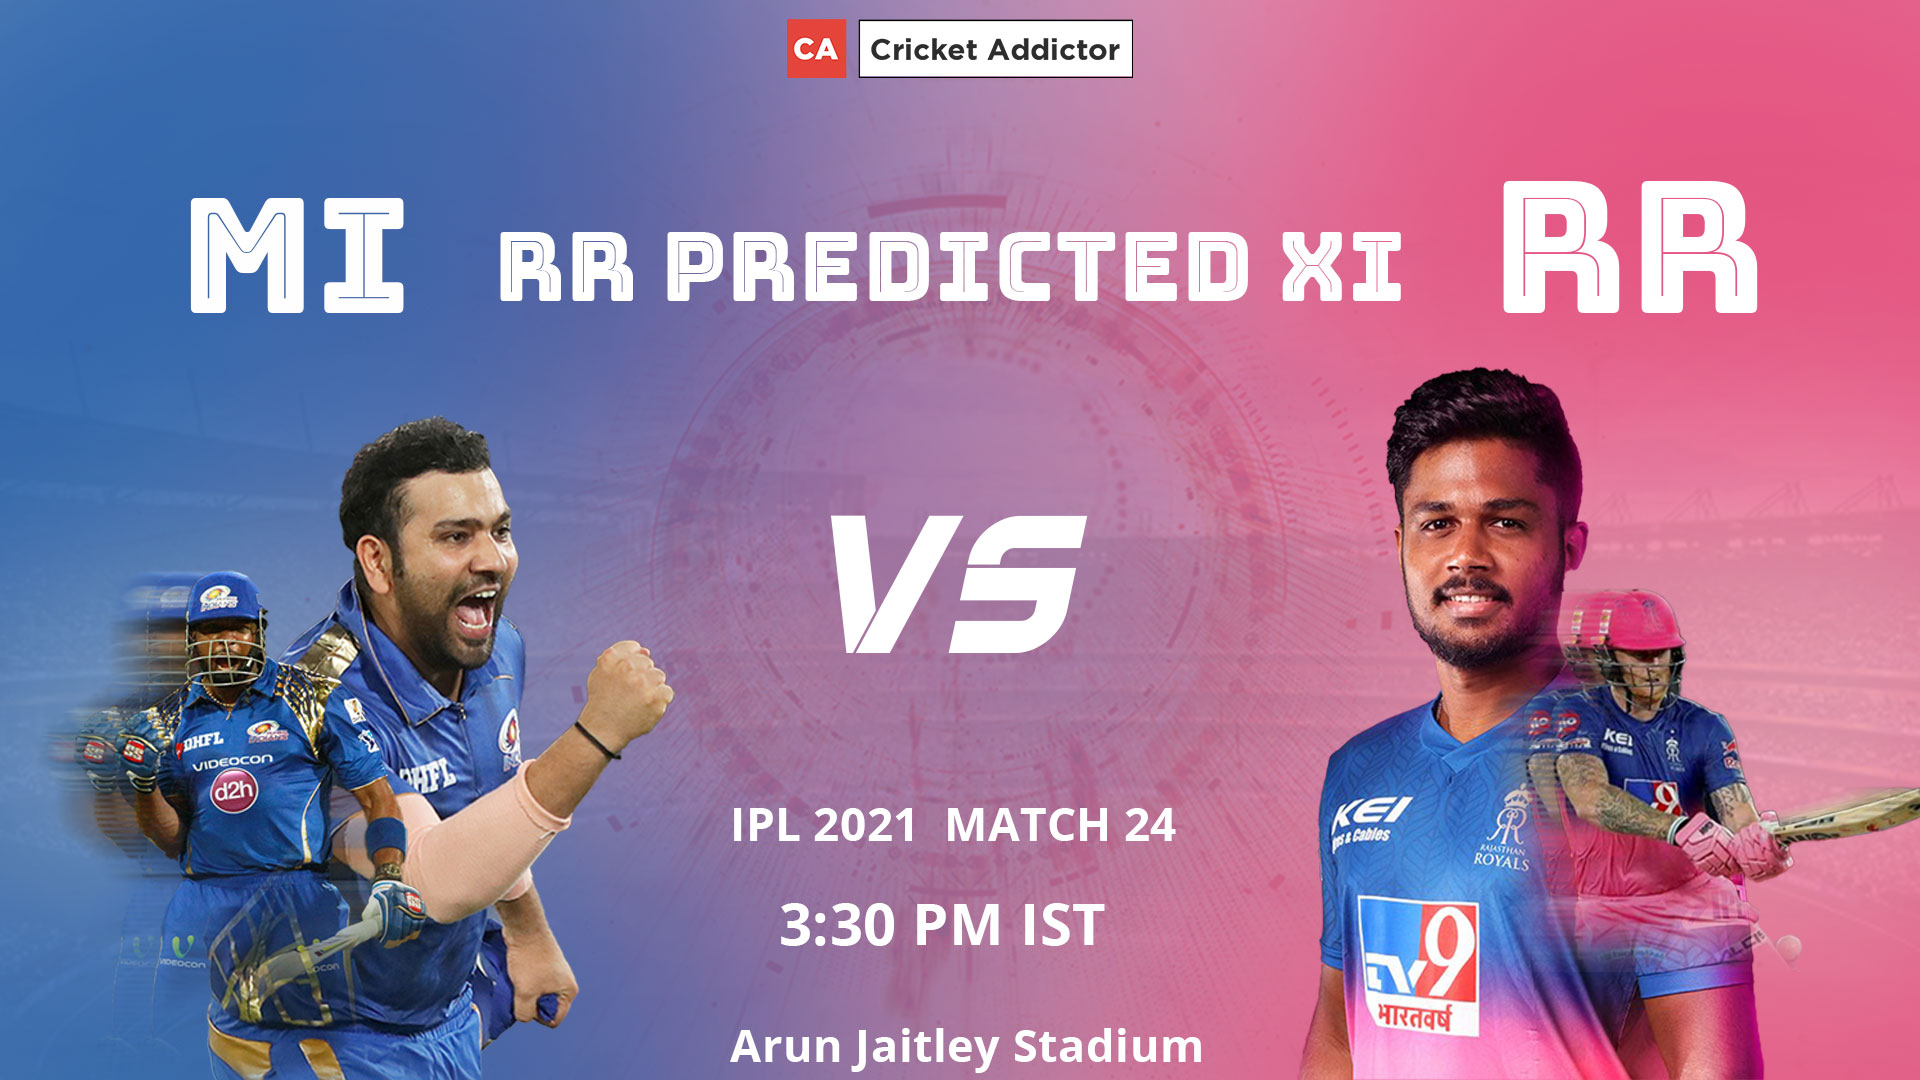 IPL 2021, Rajasthan Royals, RR, MI vs RR, predicted playing XI, playing XI